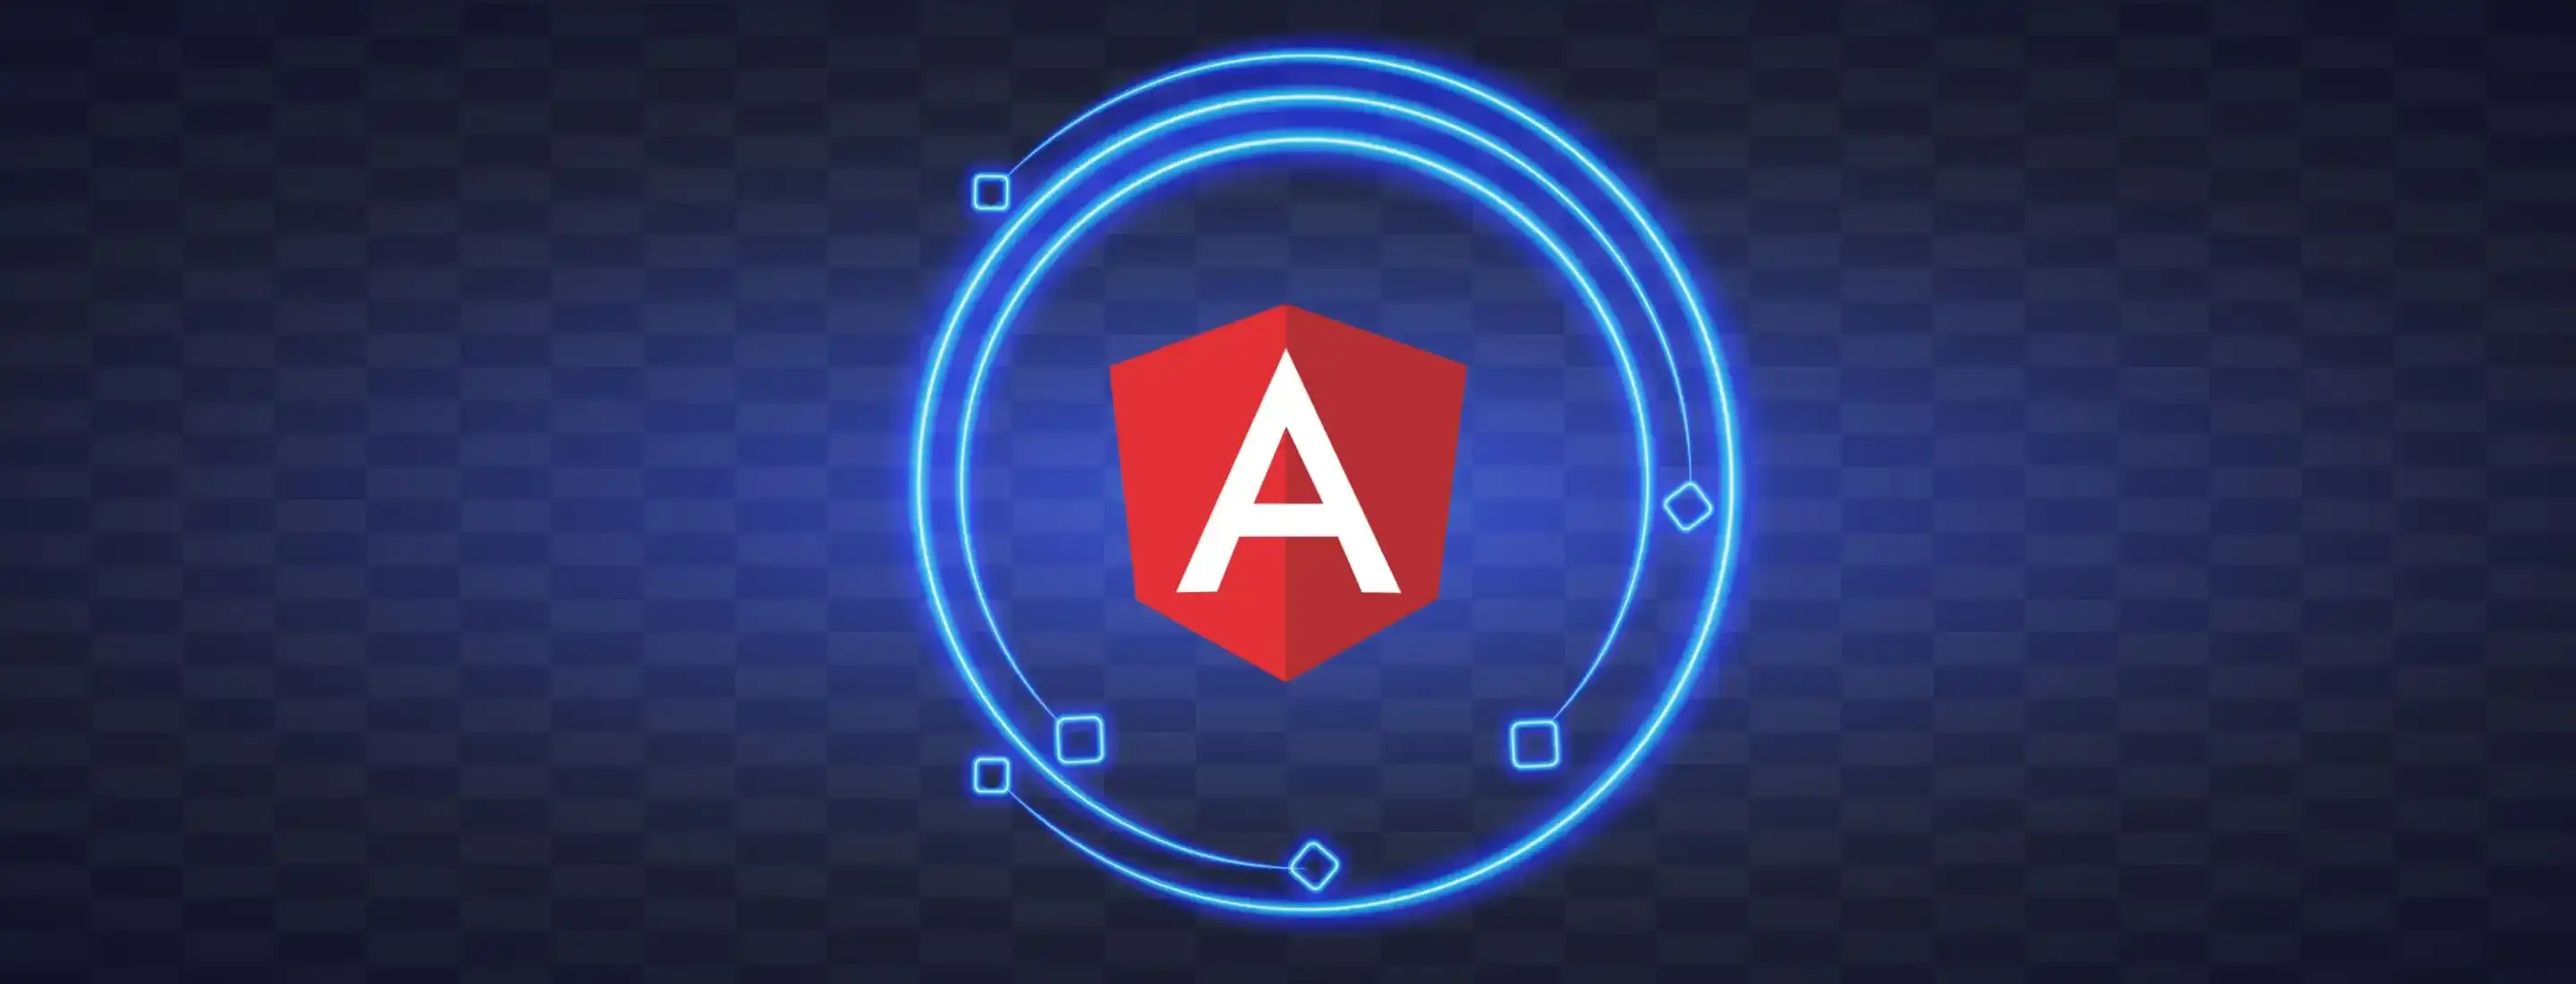 Top Angular Frameworks For Web App Development